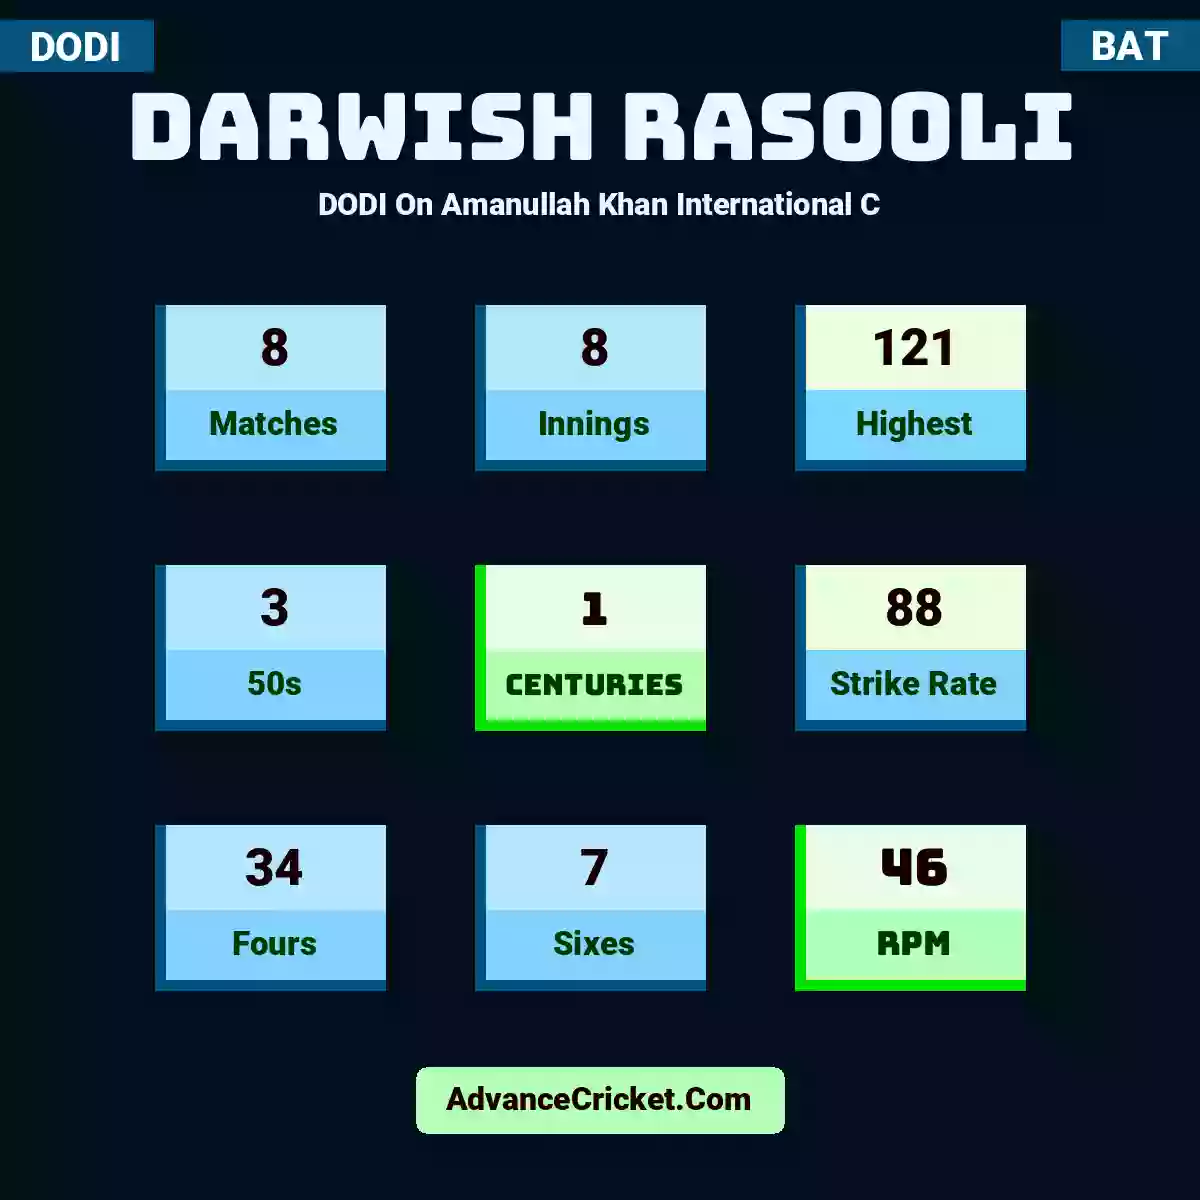 Darwish Rasooli DODI  On Amanullah Khan International C, Darwish Rasooli played 8 matches, scored 121 runs as highest, 3 half-centuries, and 1 centuries, with a strike rate of 88. D.Rasooli hit 34 fours and 7 sixes, with an RPM of 46.